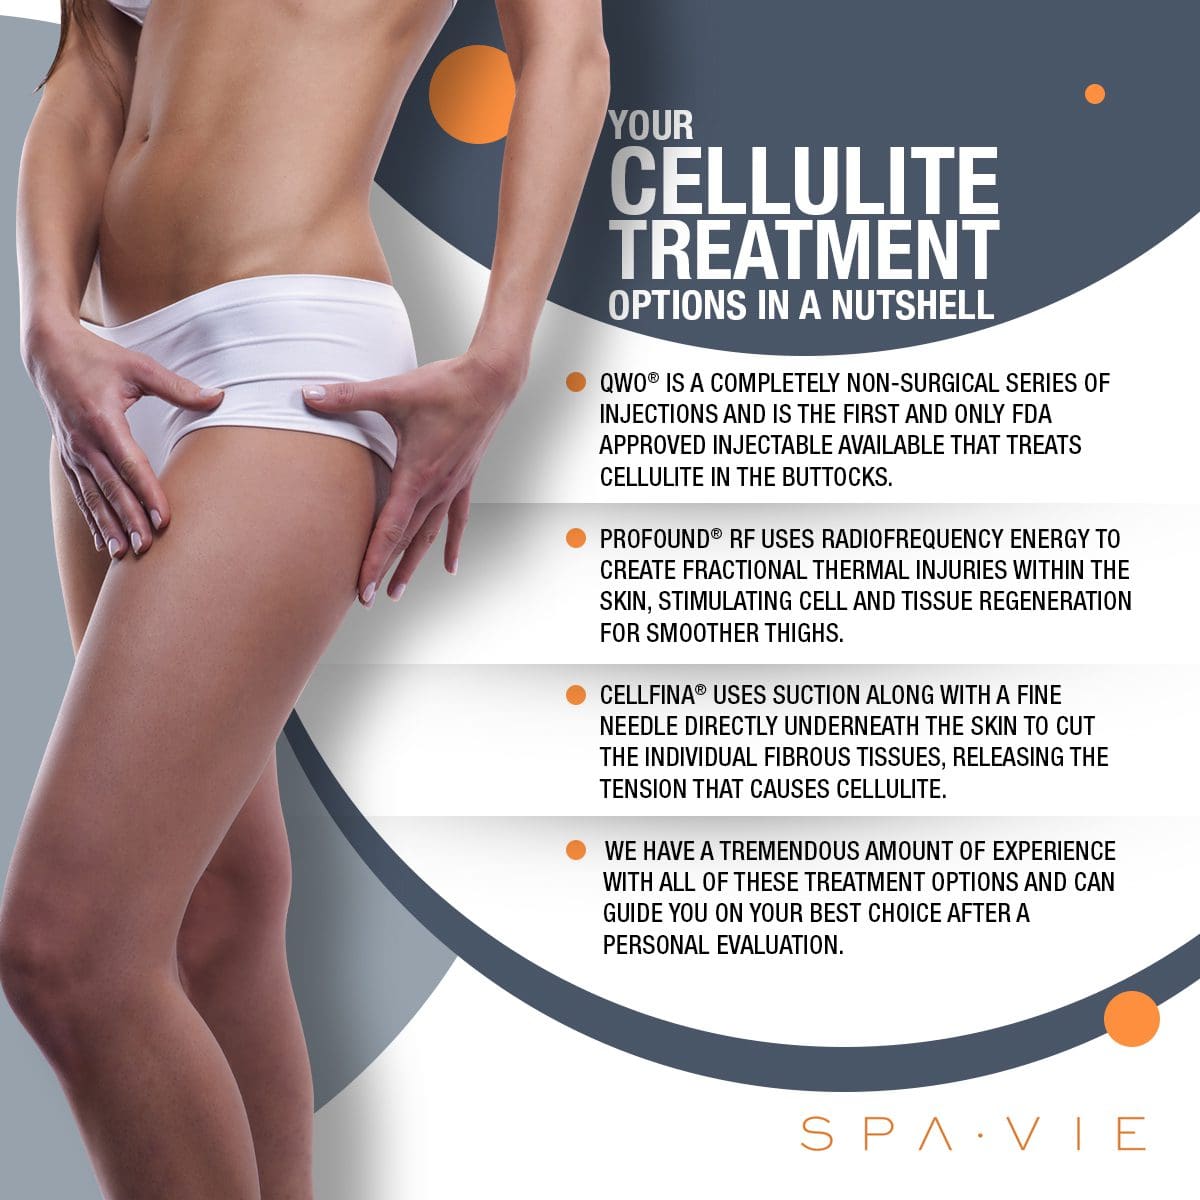 Cellulite Treatment